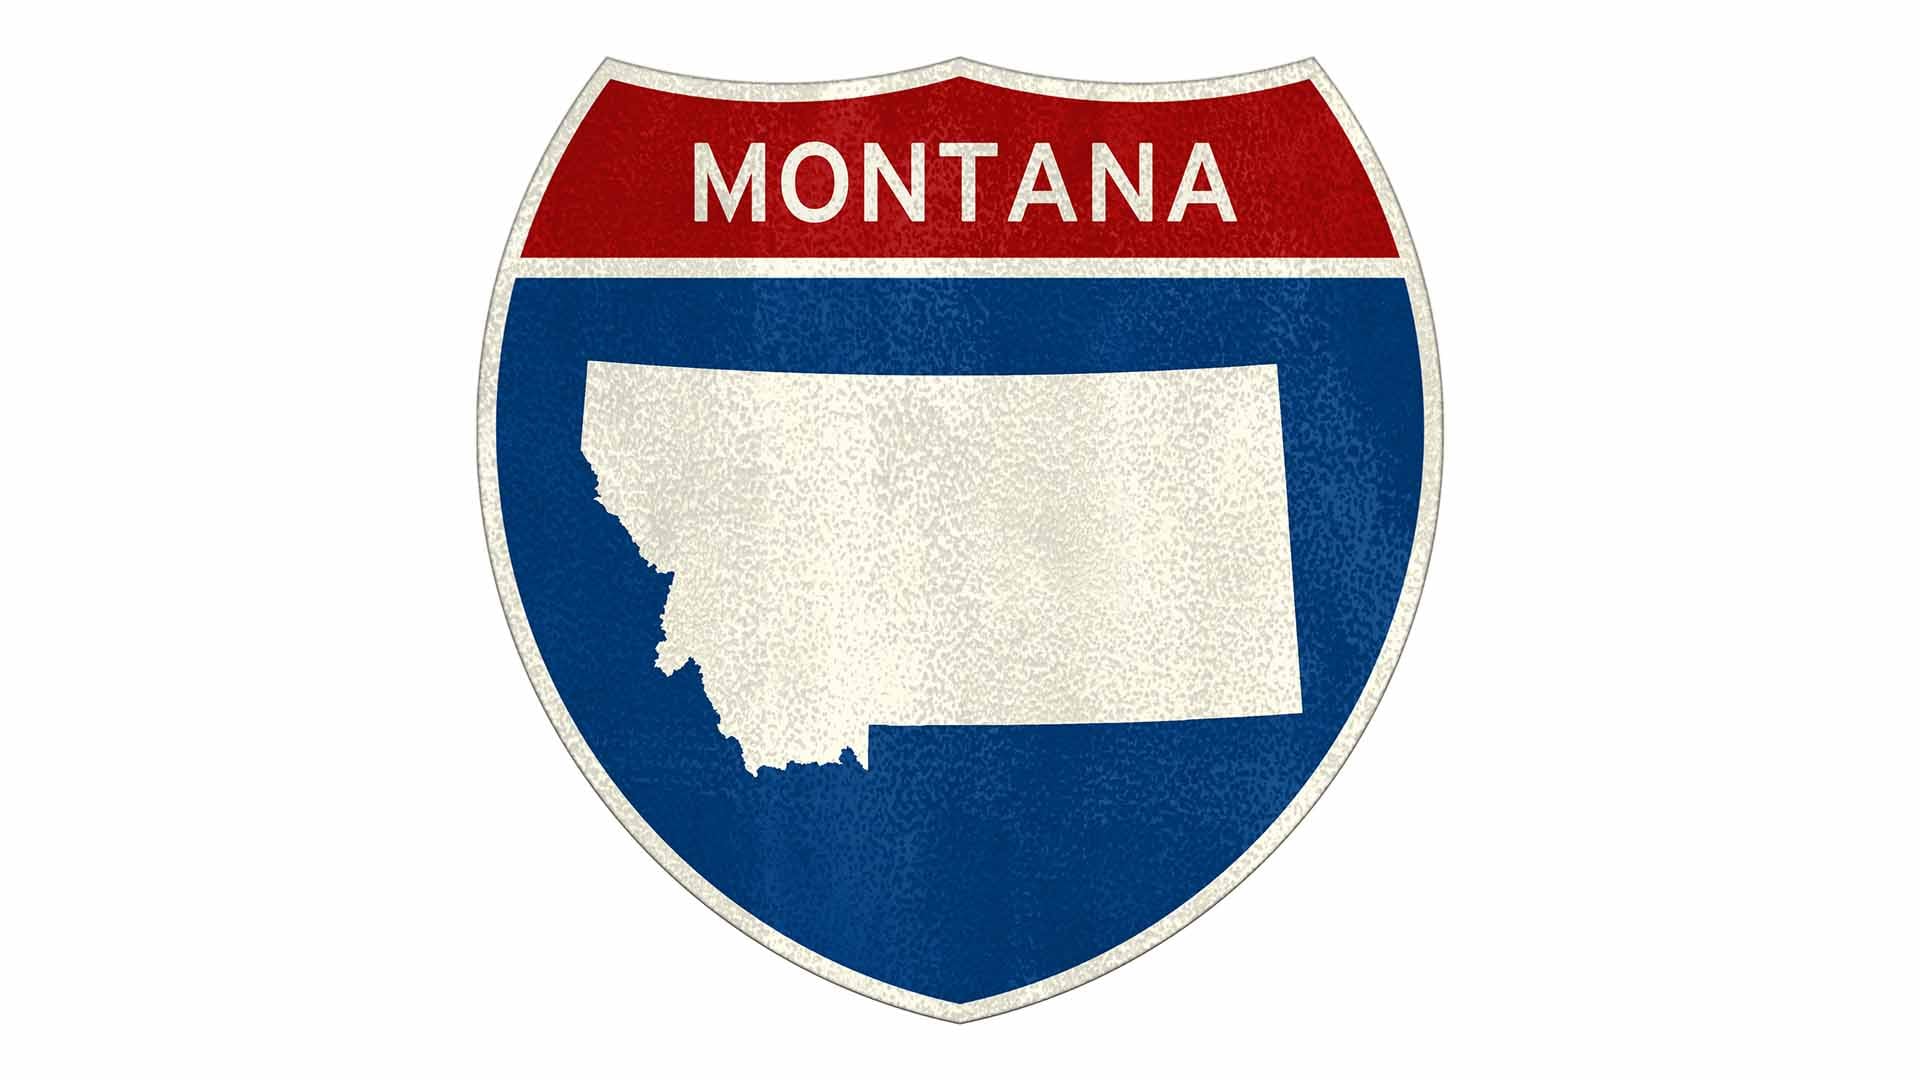 Montana state roadside sign